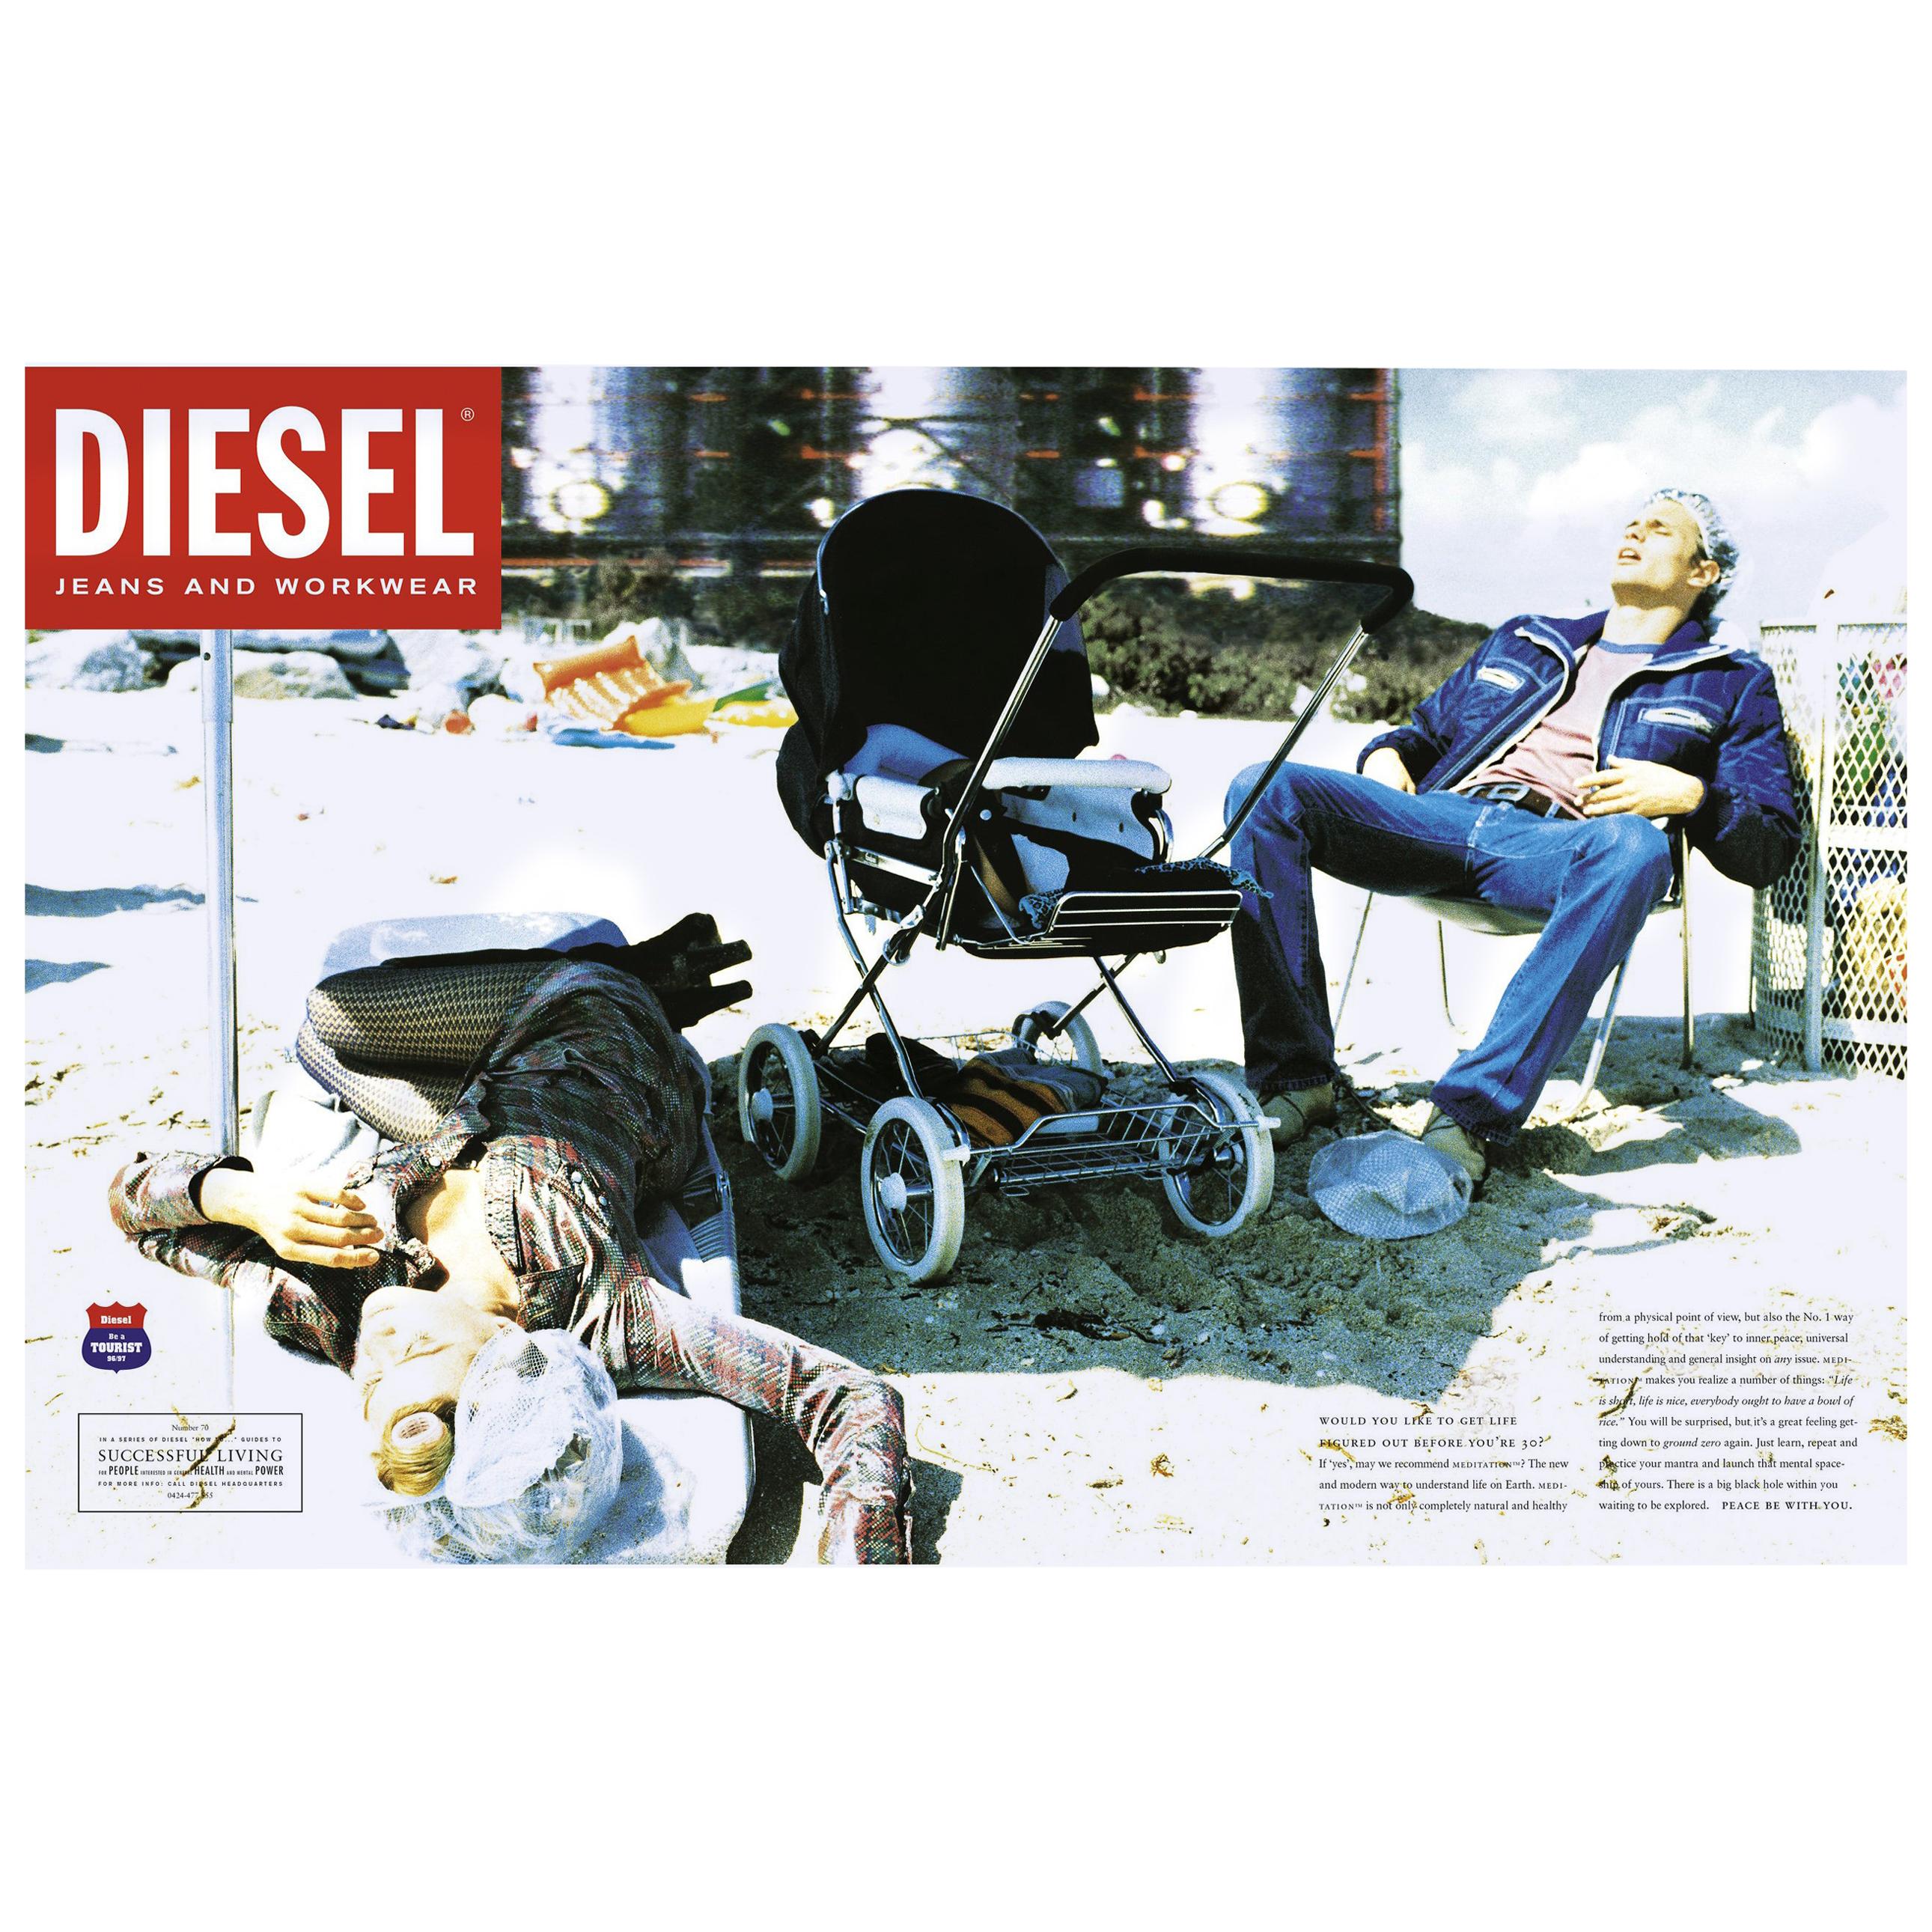 Unique Photography by Ellen Von Unwerth for Diesel Jeans Advertisements